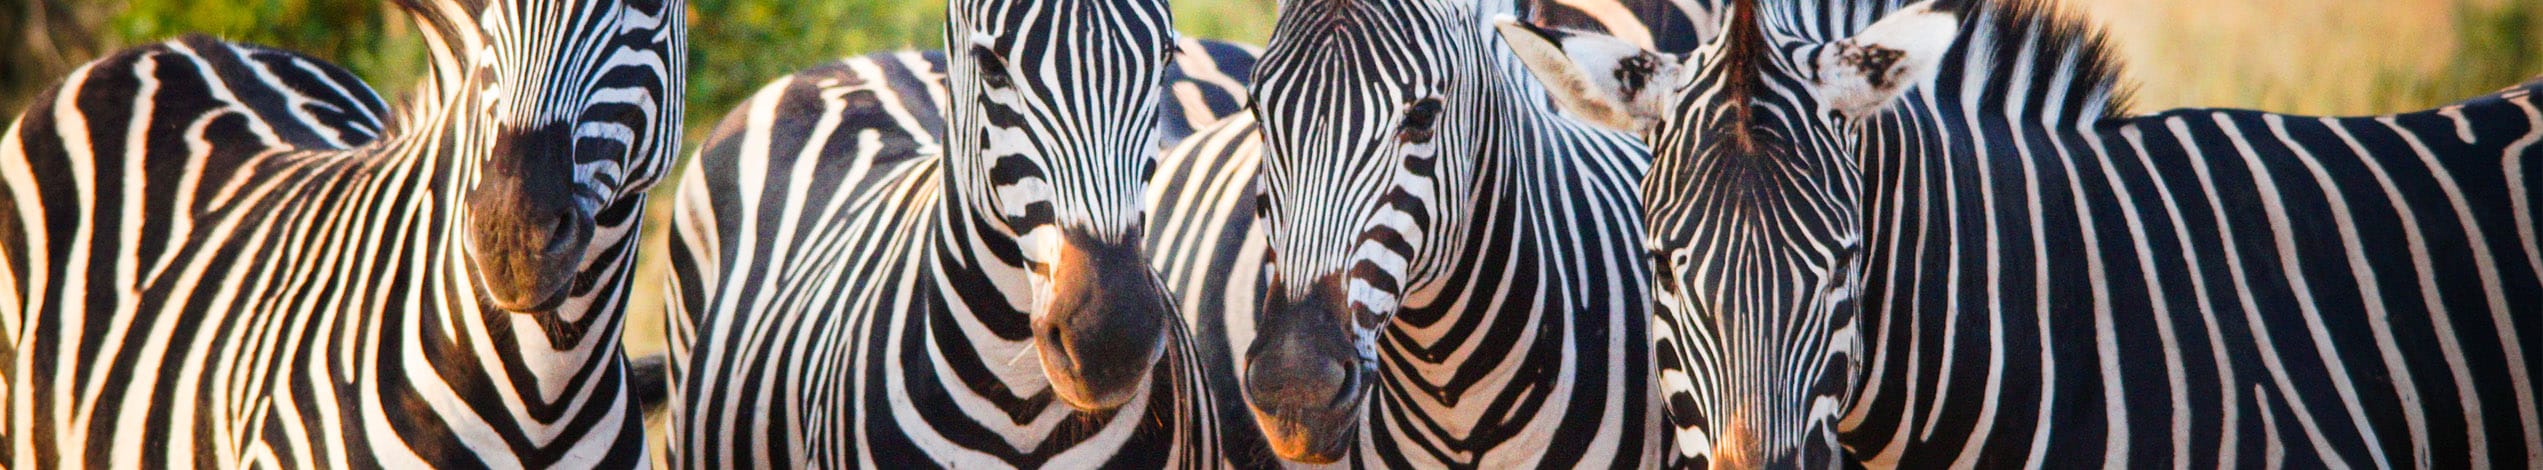 Safari i Kruger nationalpark